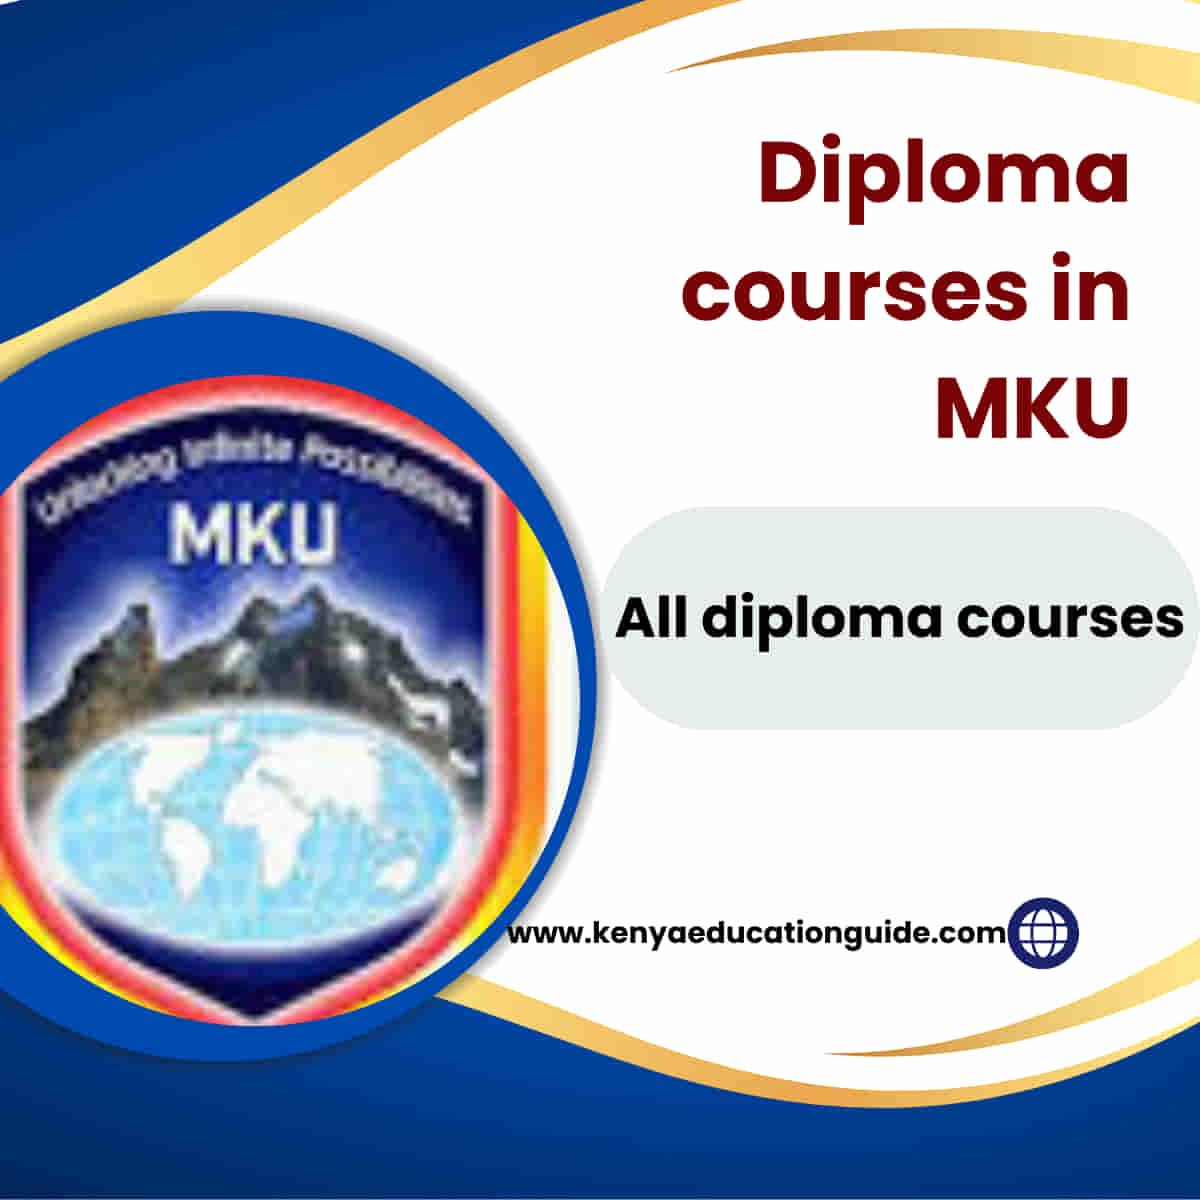 Diploma courses in MKU